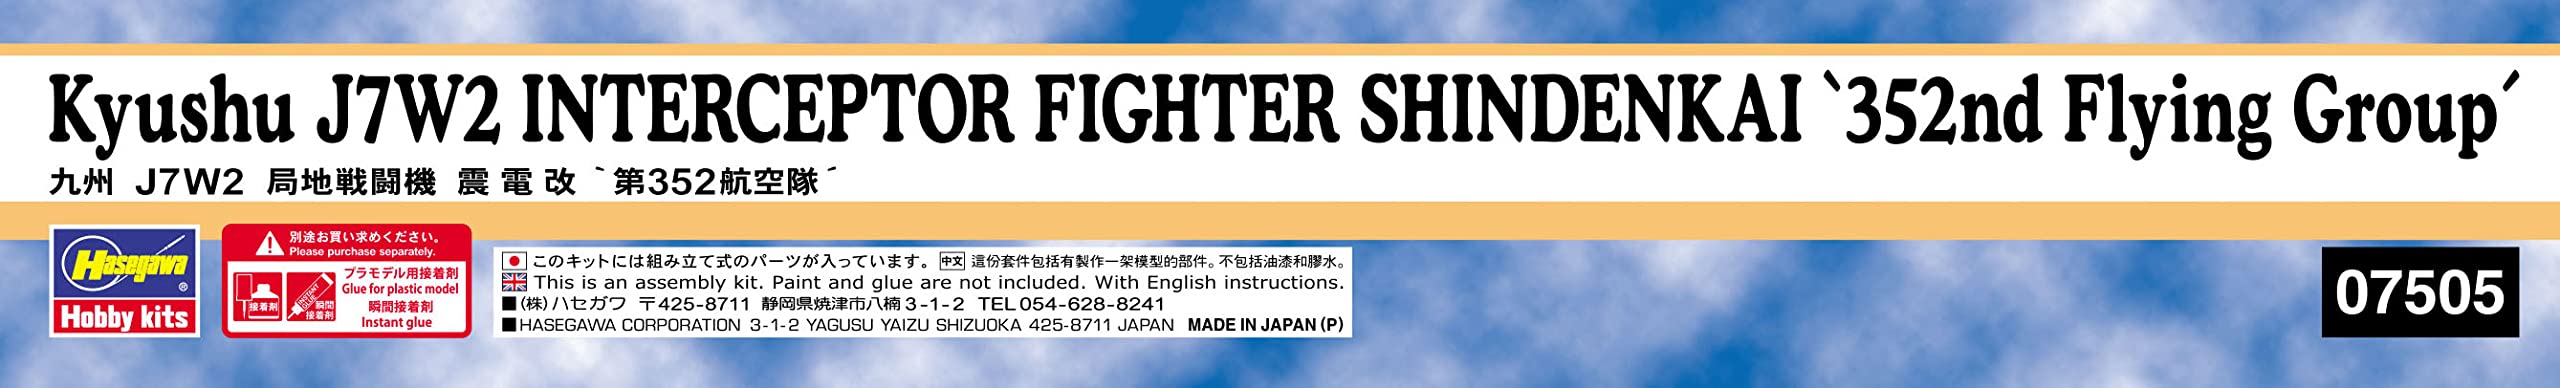 HASEGAWA 1/48 Kyushu J7W2 Interceptor Shinden Kai "352Nd Flying Corps" Plastic Model